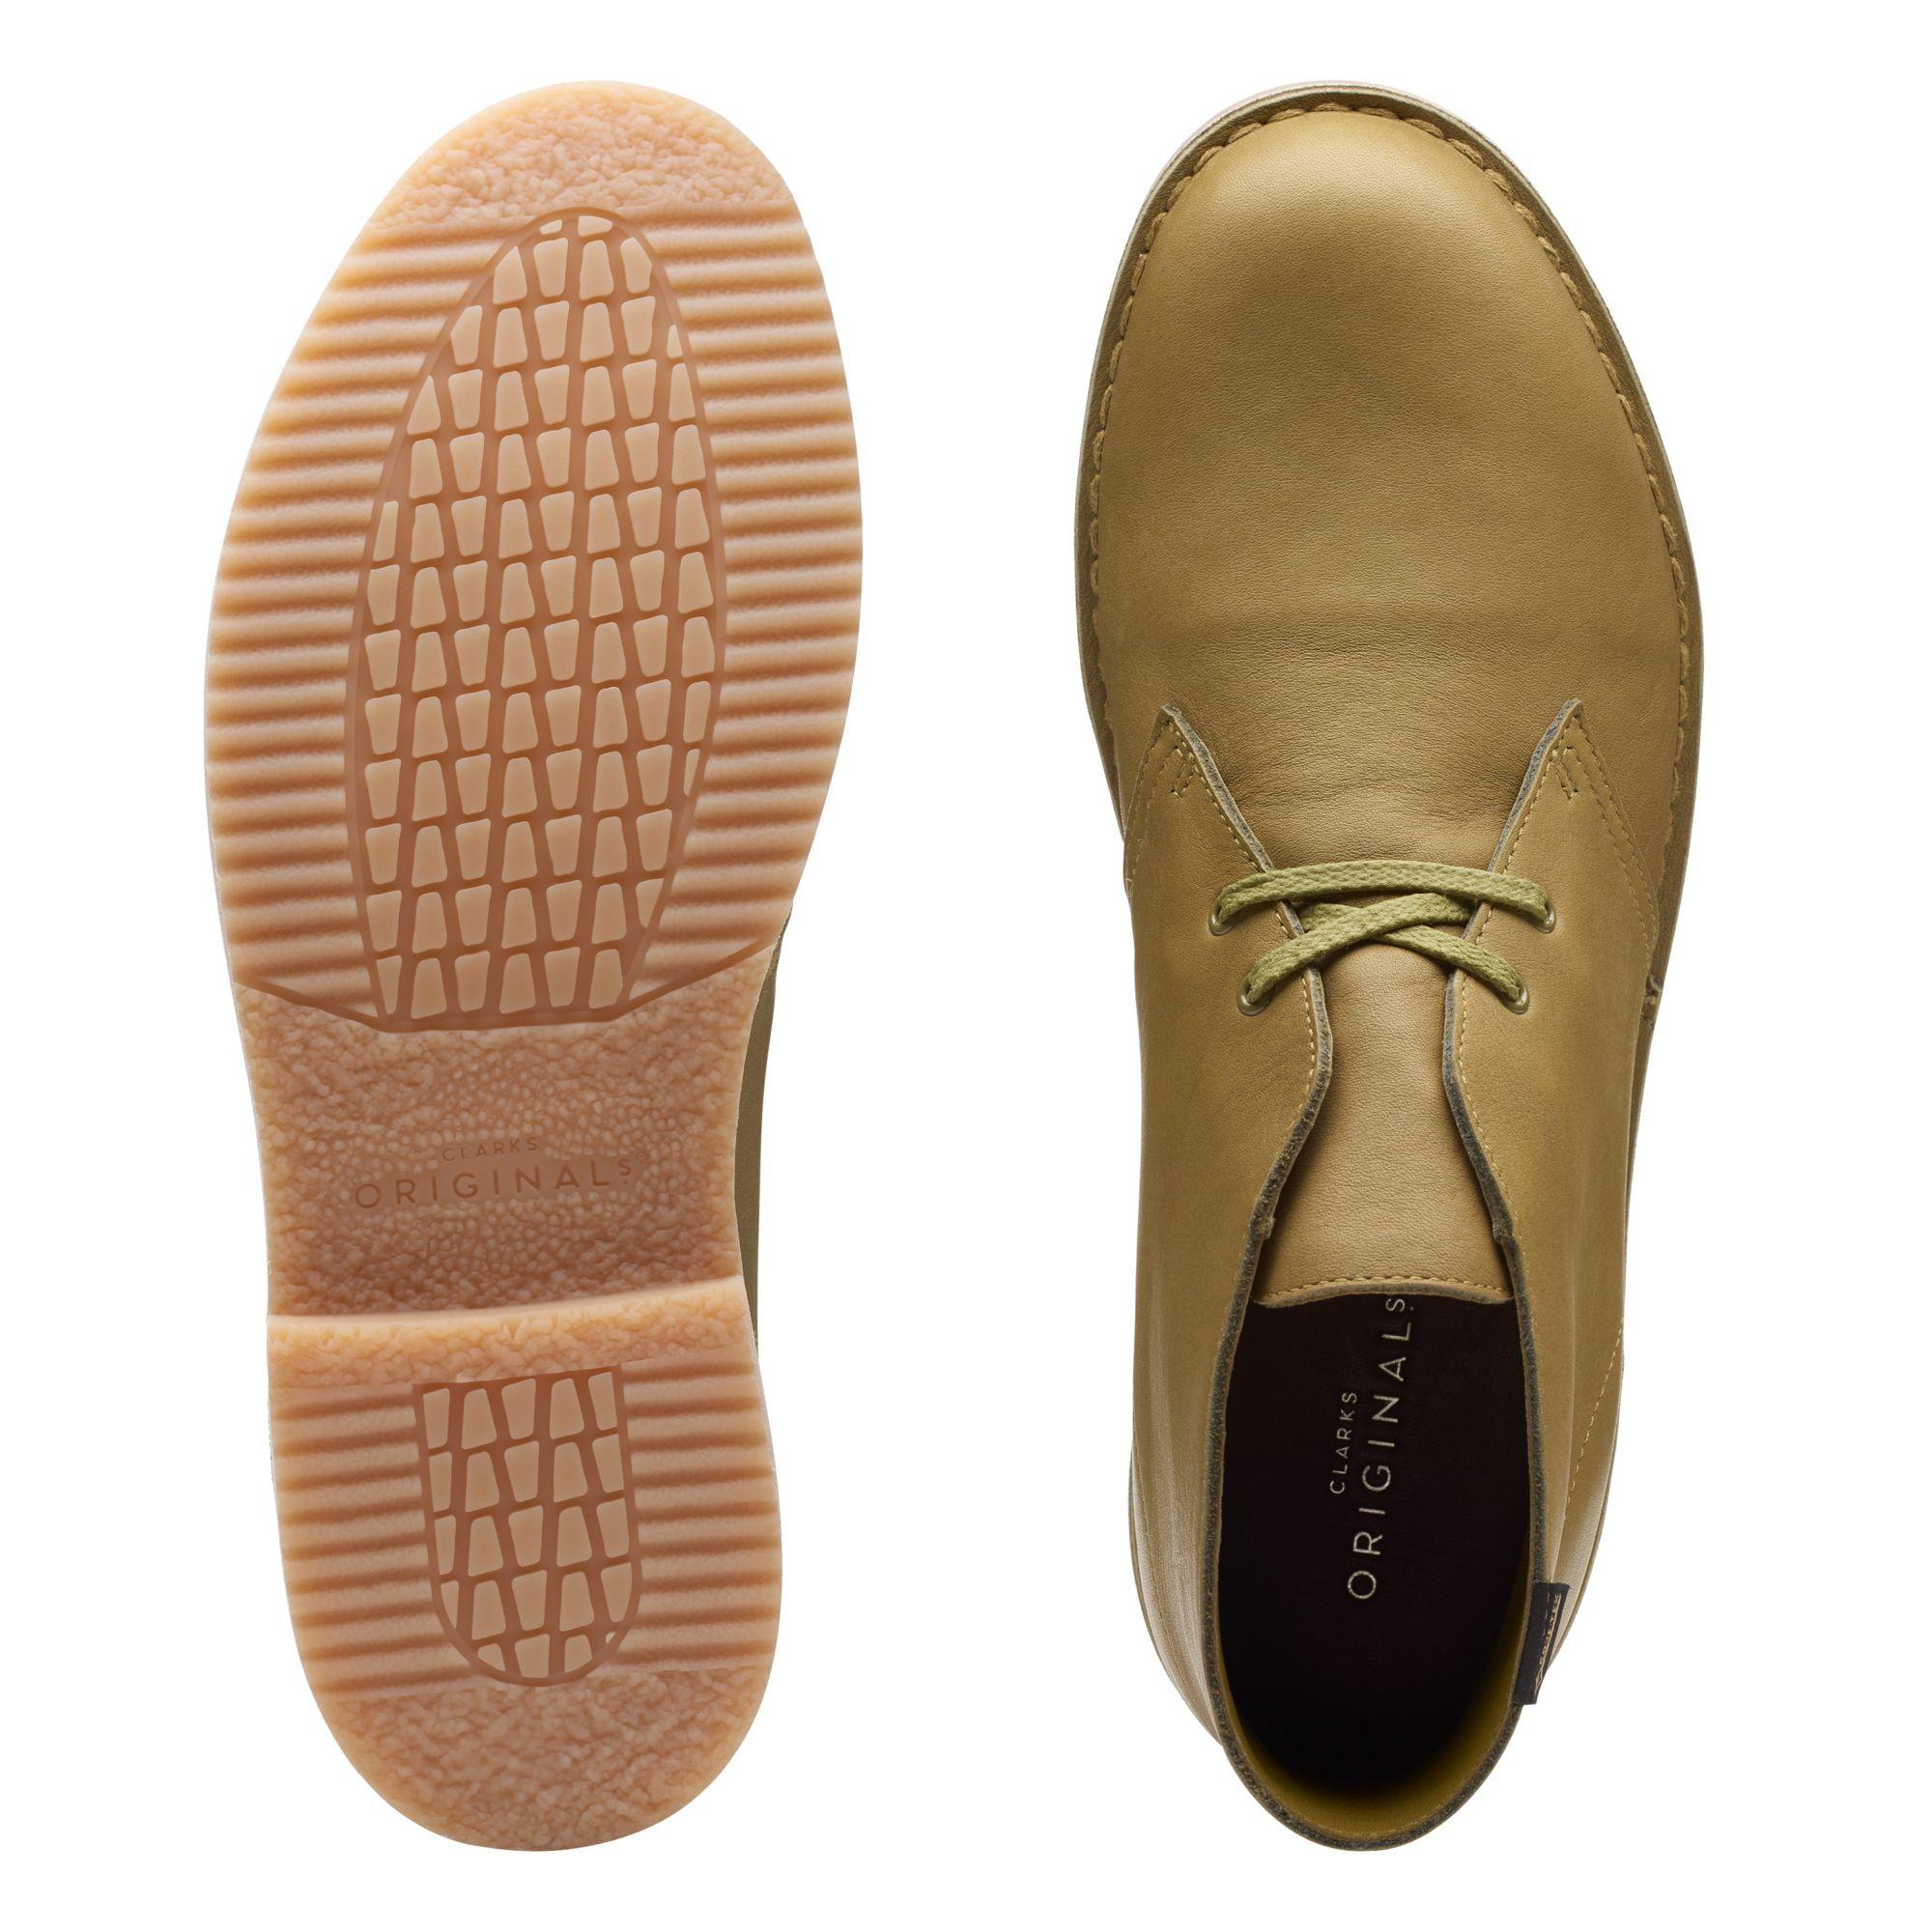 Clarks Leather Desert Gtx Boot in Khaki Leather (Natural) for Men - Lyst